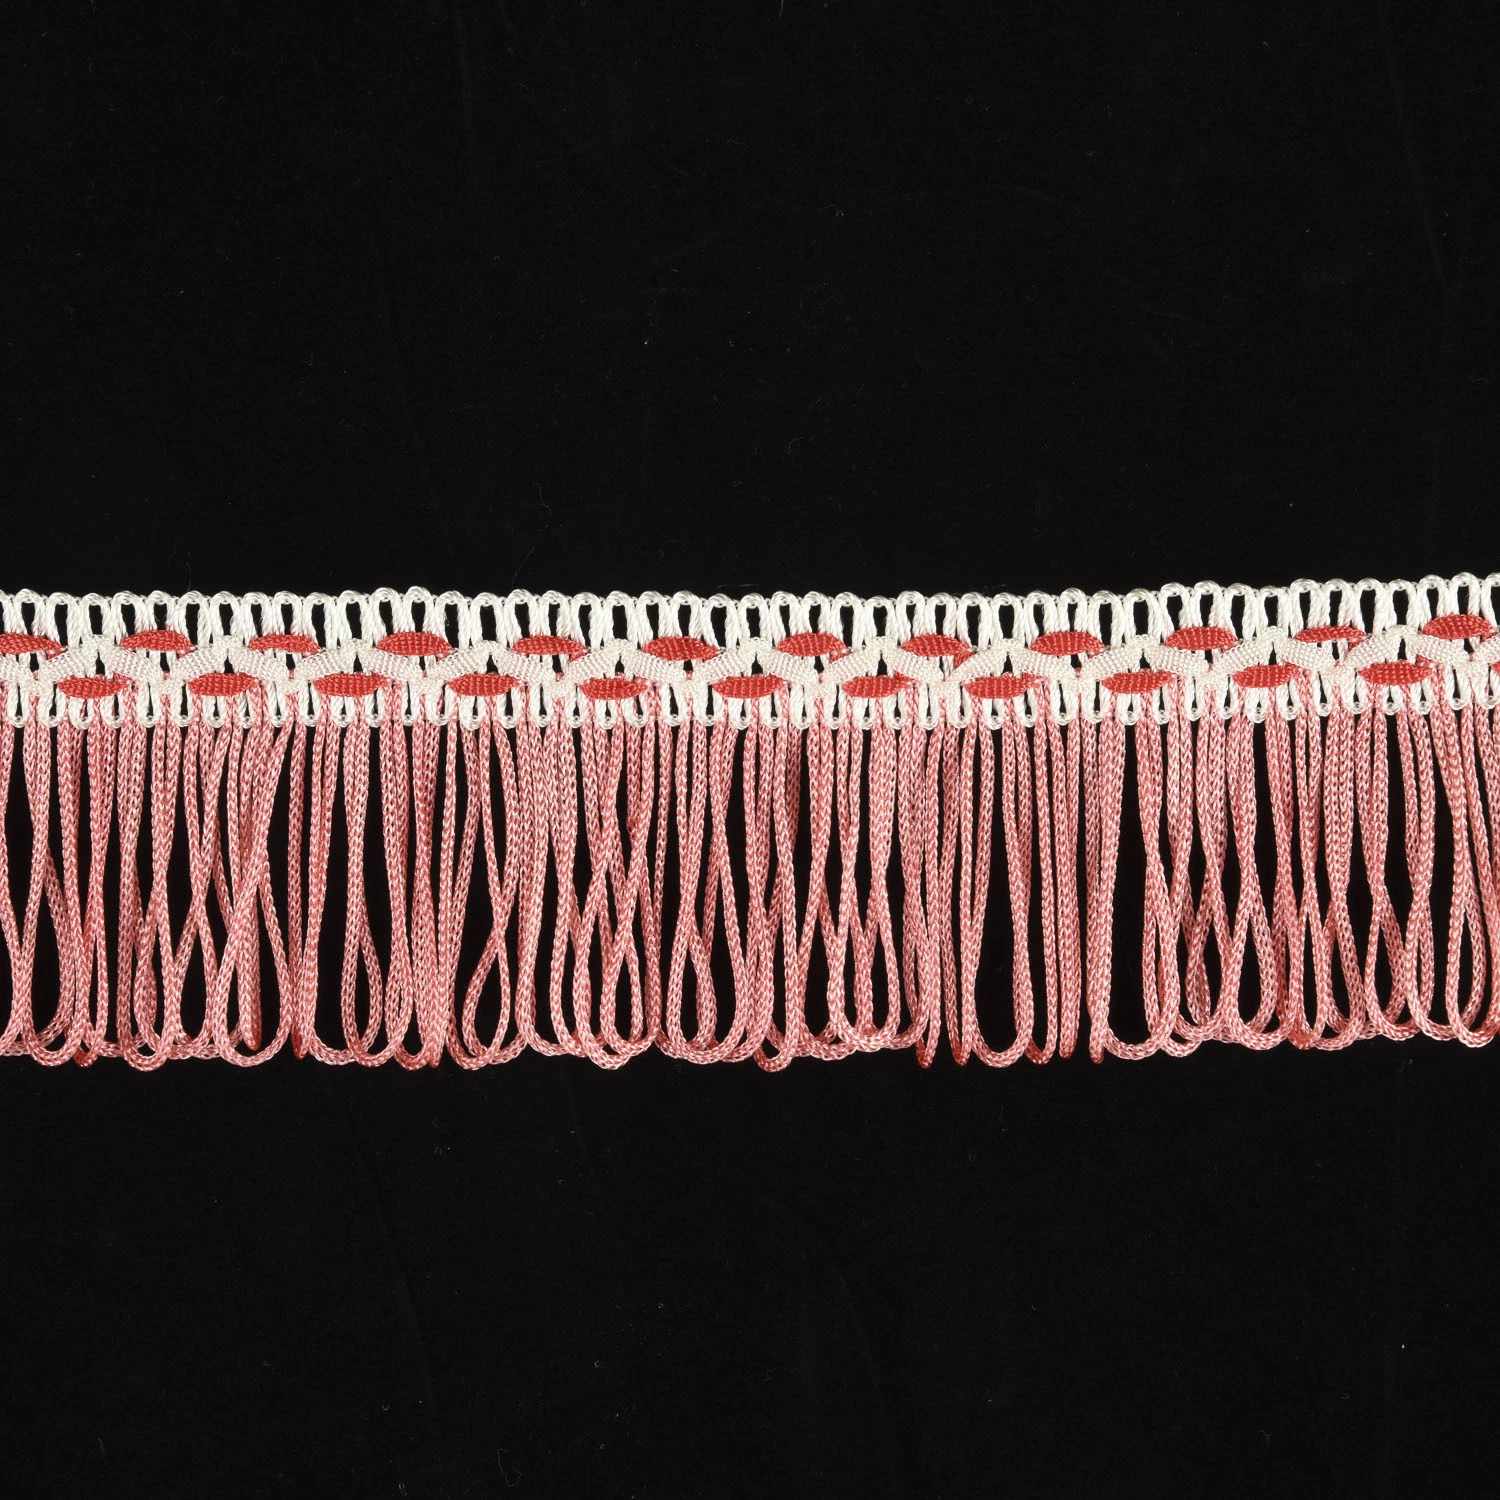 Decorative Brush Fringe Tassel Lace Trim for Craft Upholstery